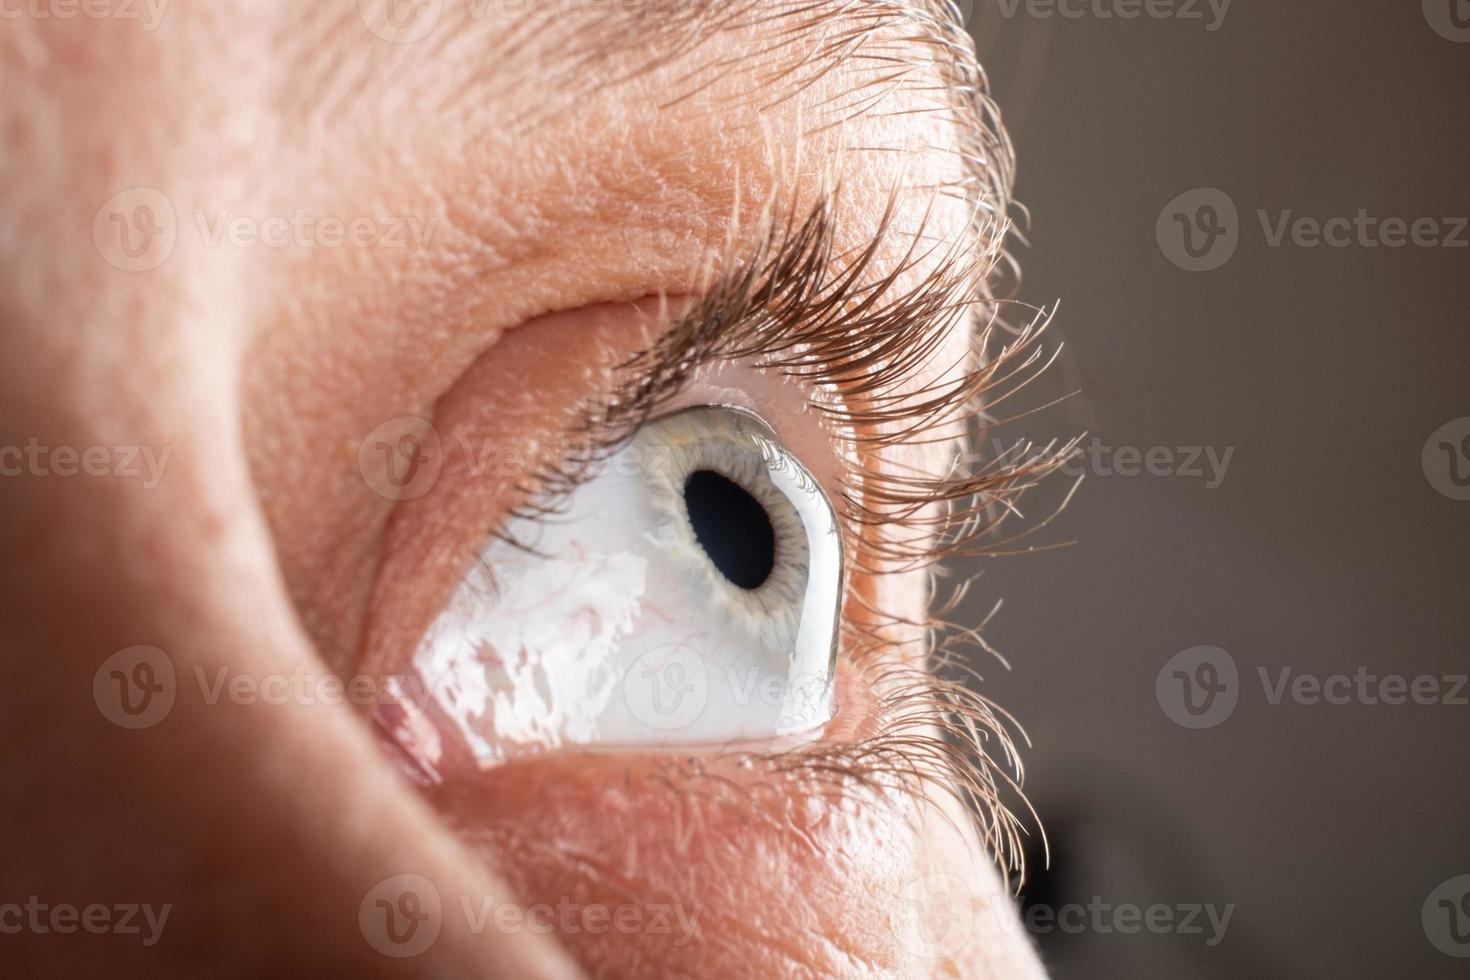 closeup de olho de ceratocone, afinamento da córnea foto